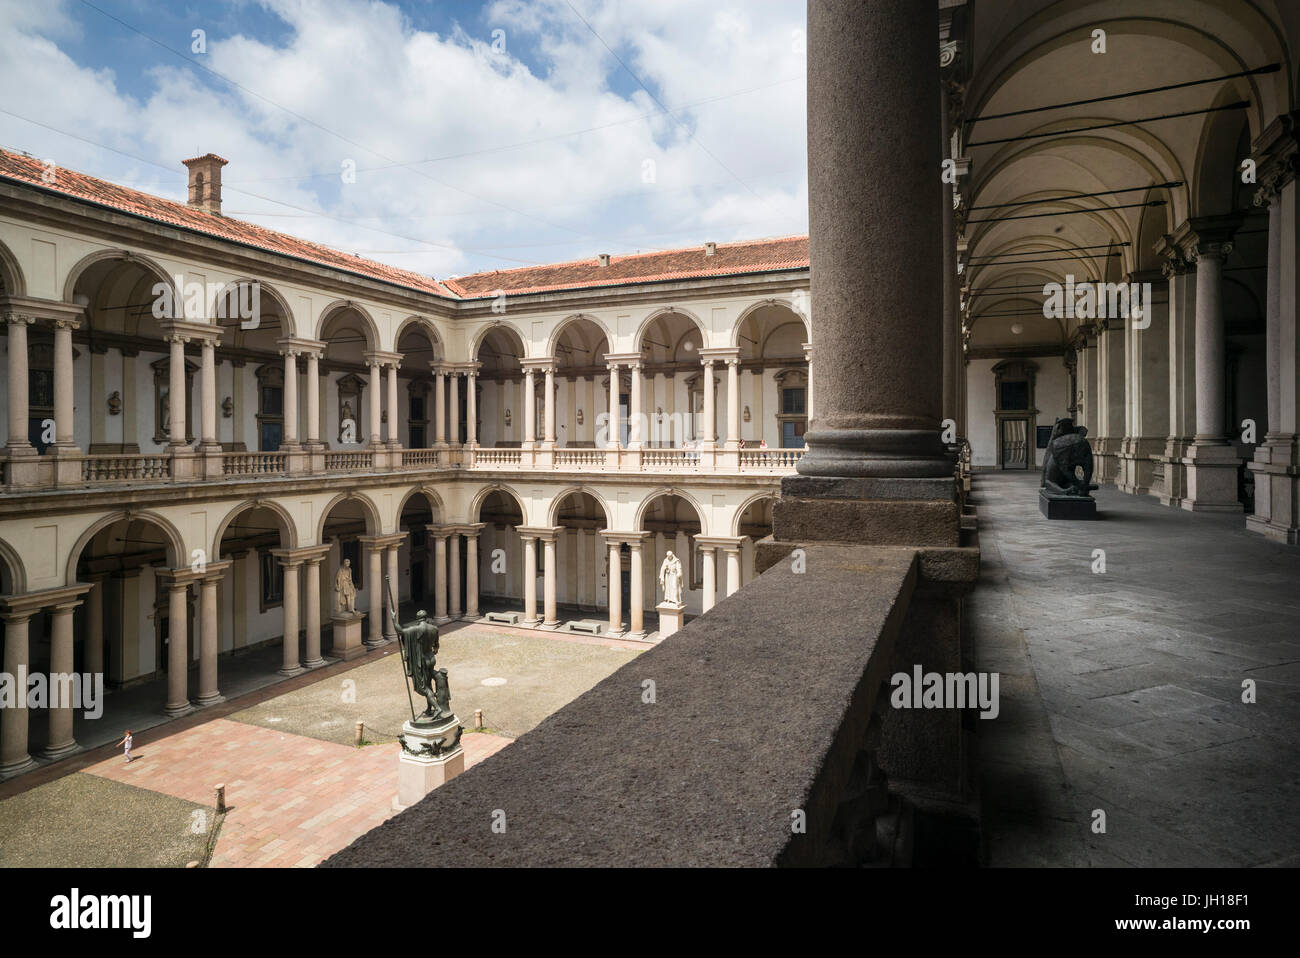 Milan. Italy. Courtyard of the Palazzo Brera, home to the Pinacoteca di Brera, Accademia di Belle Arti, and the Biblioteca di Brera amongst others. Stock Photo